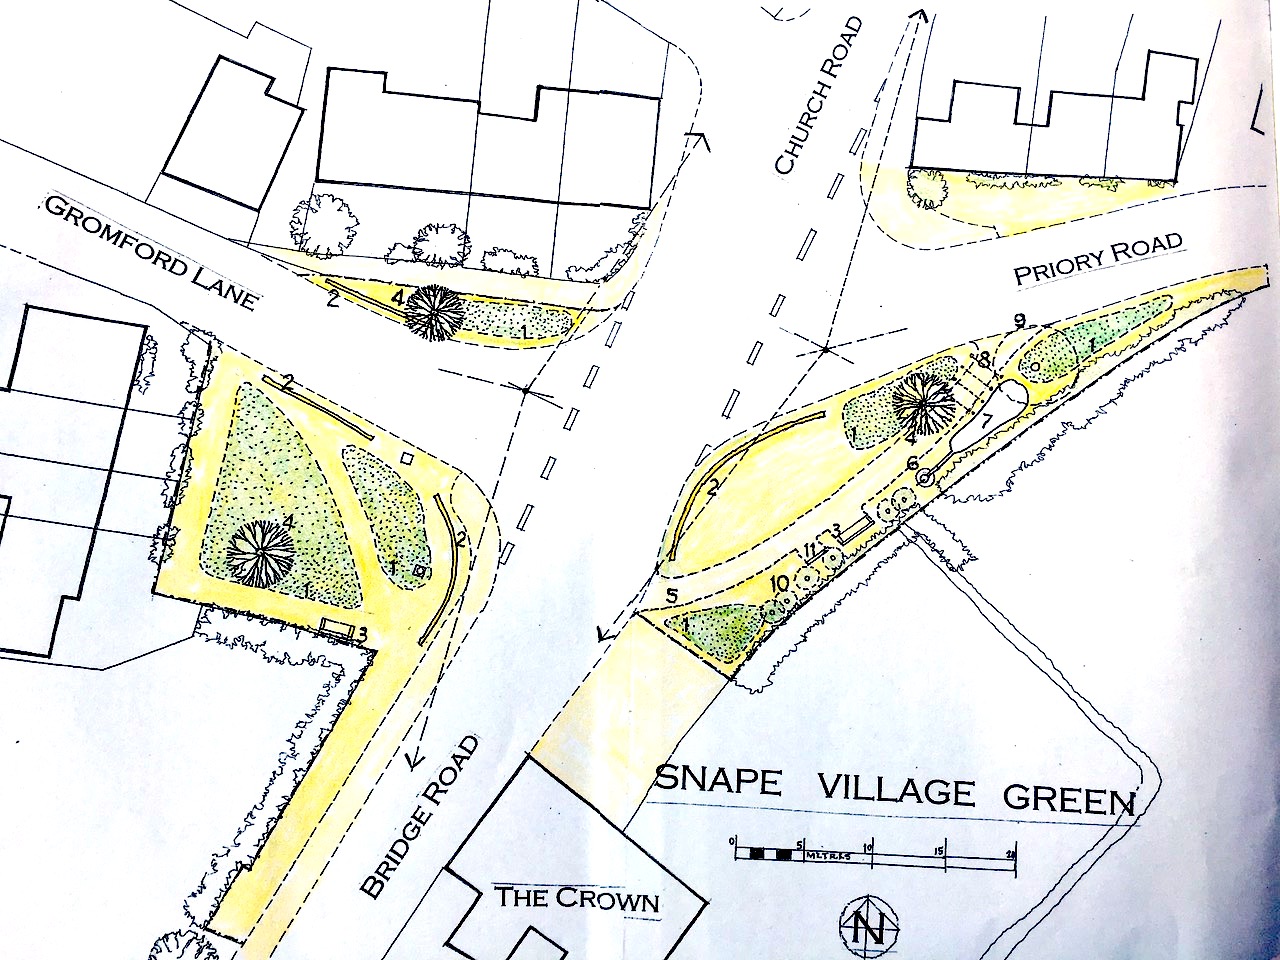 Snape Village Green proposal